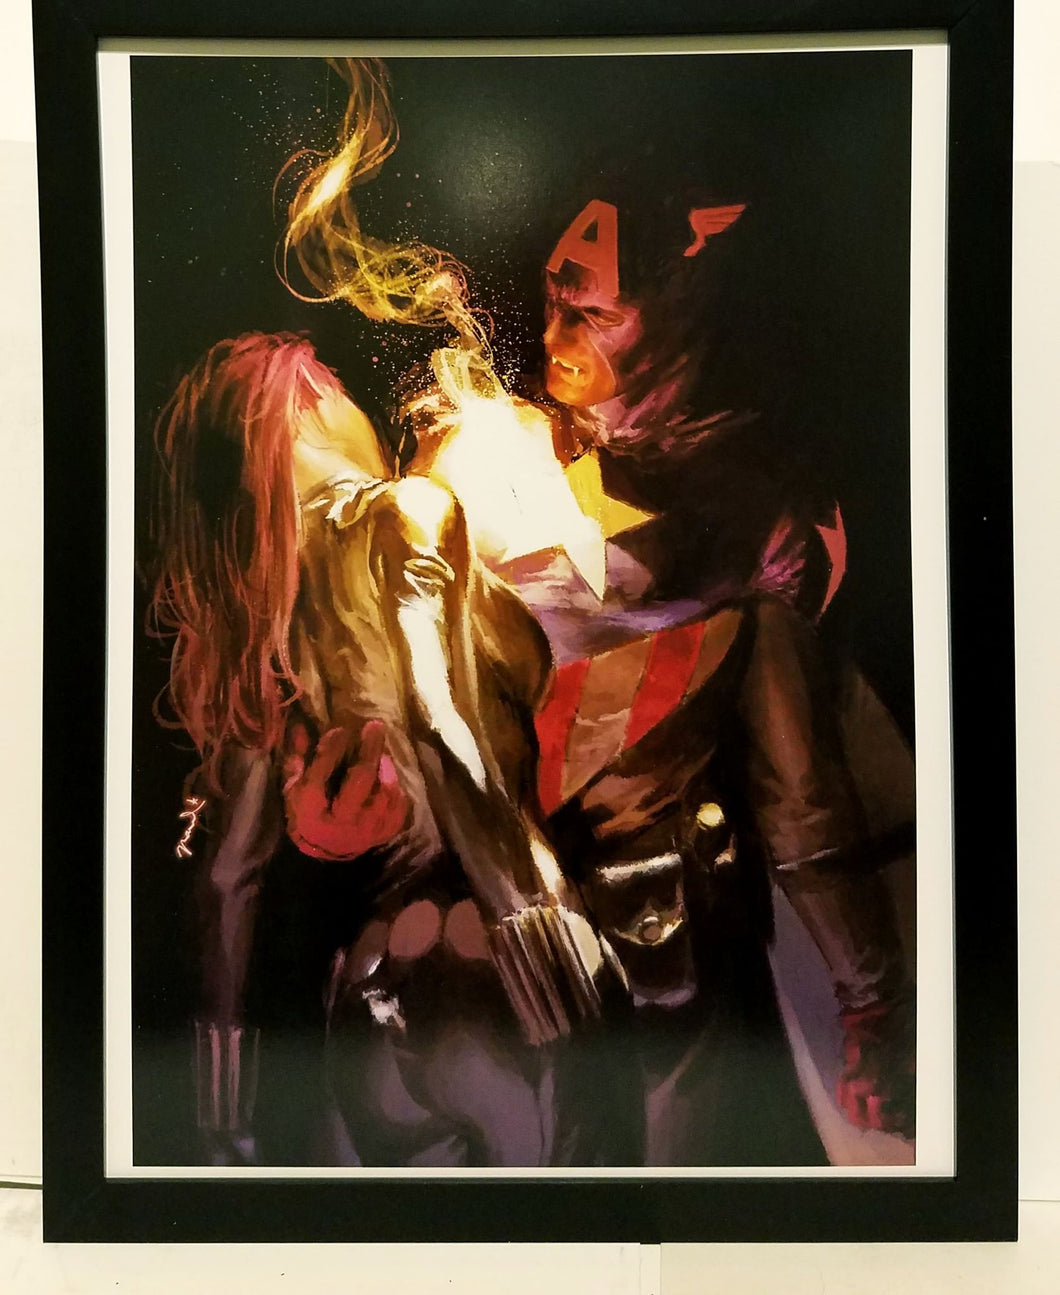 Captain America Vampire by Gerald Parel 9x12 FRAMED Art Print Marvel Comics Poster